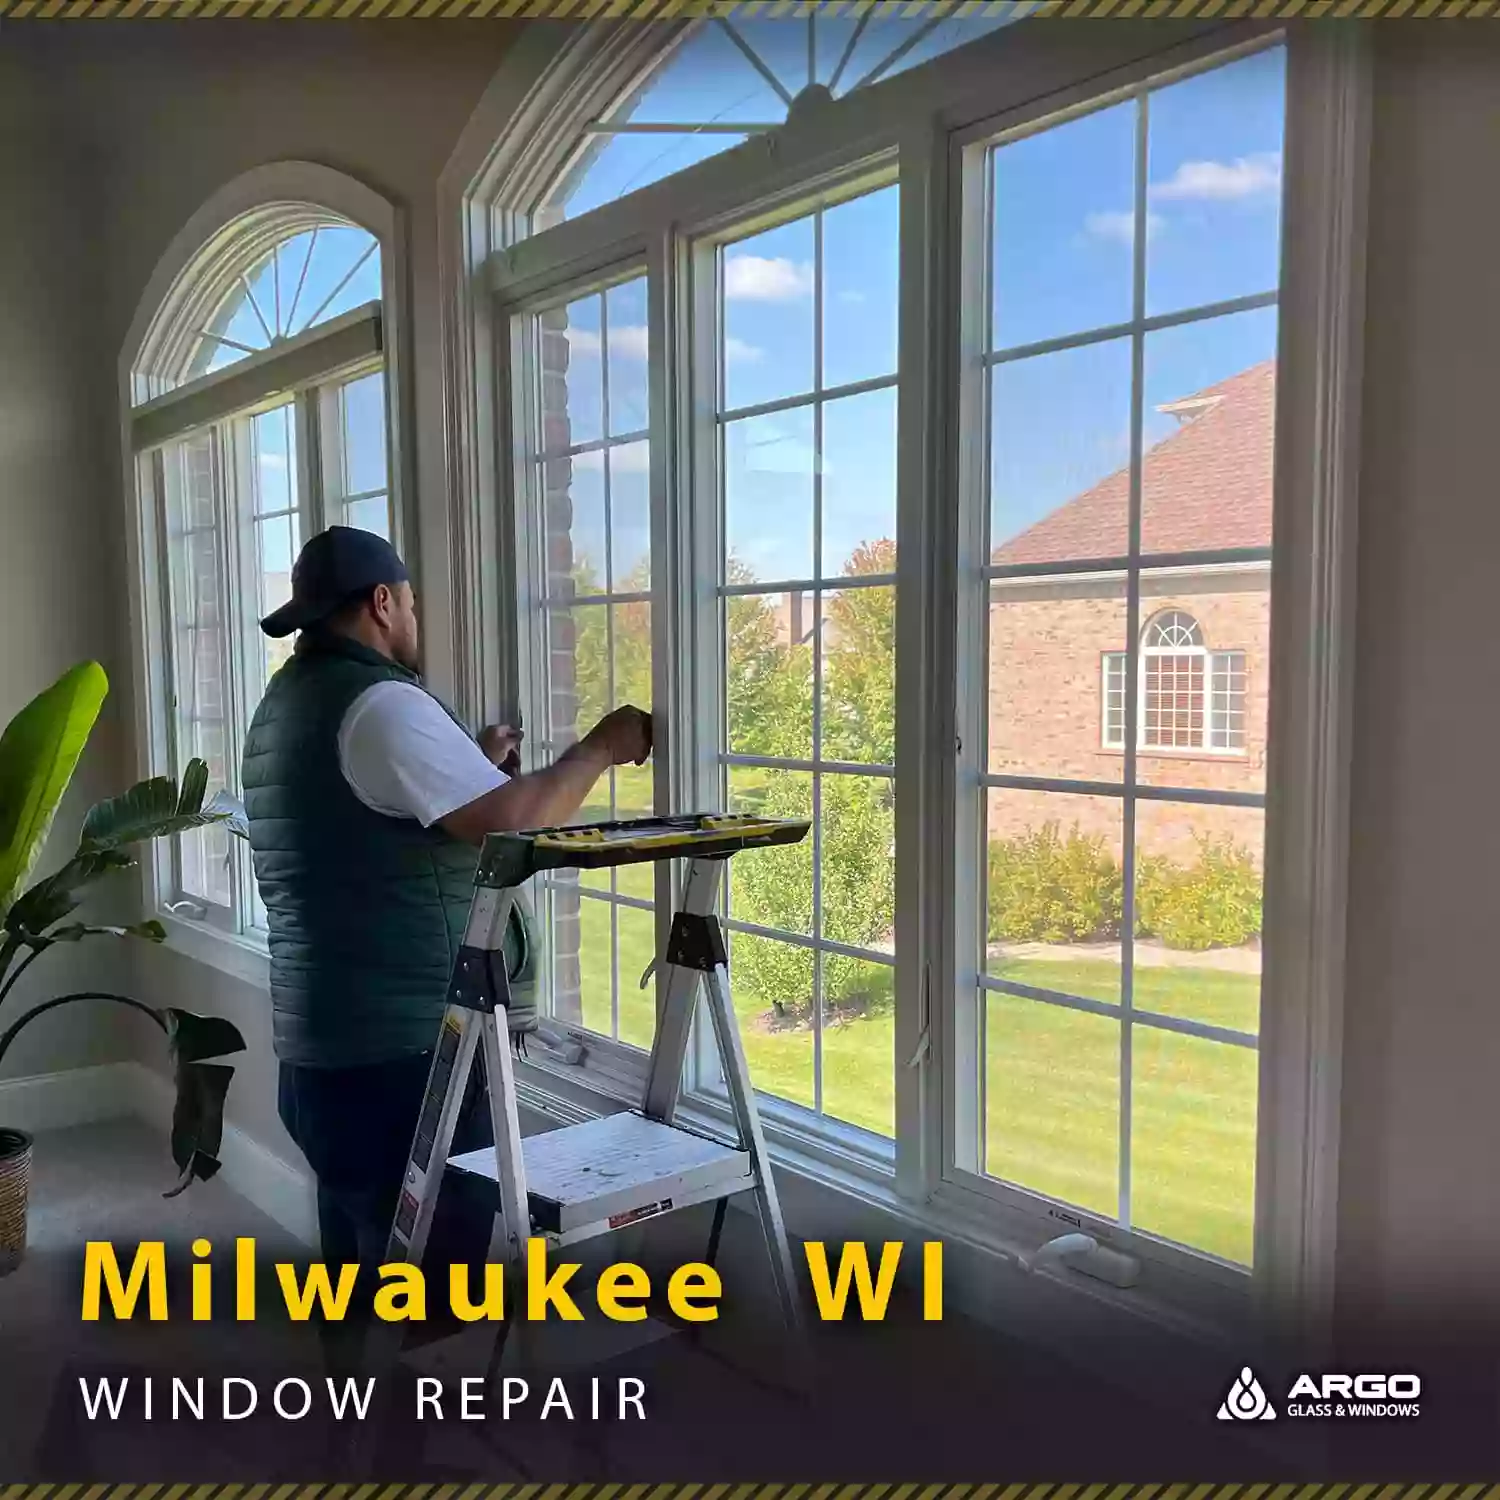 Argo Glass & Windows - Home Window Repair & Glass Replacement